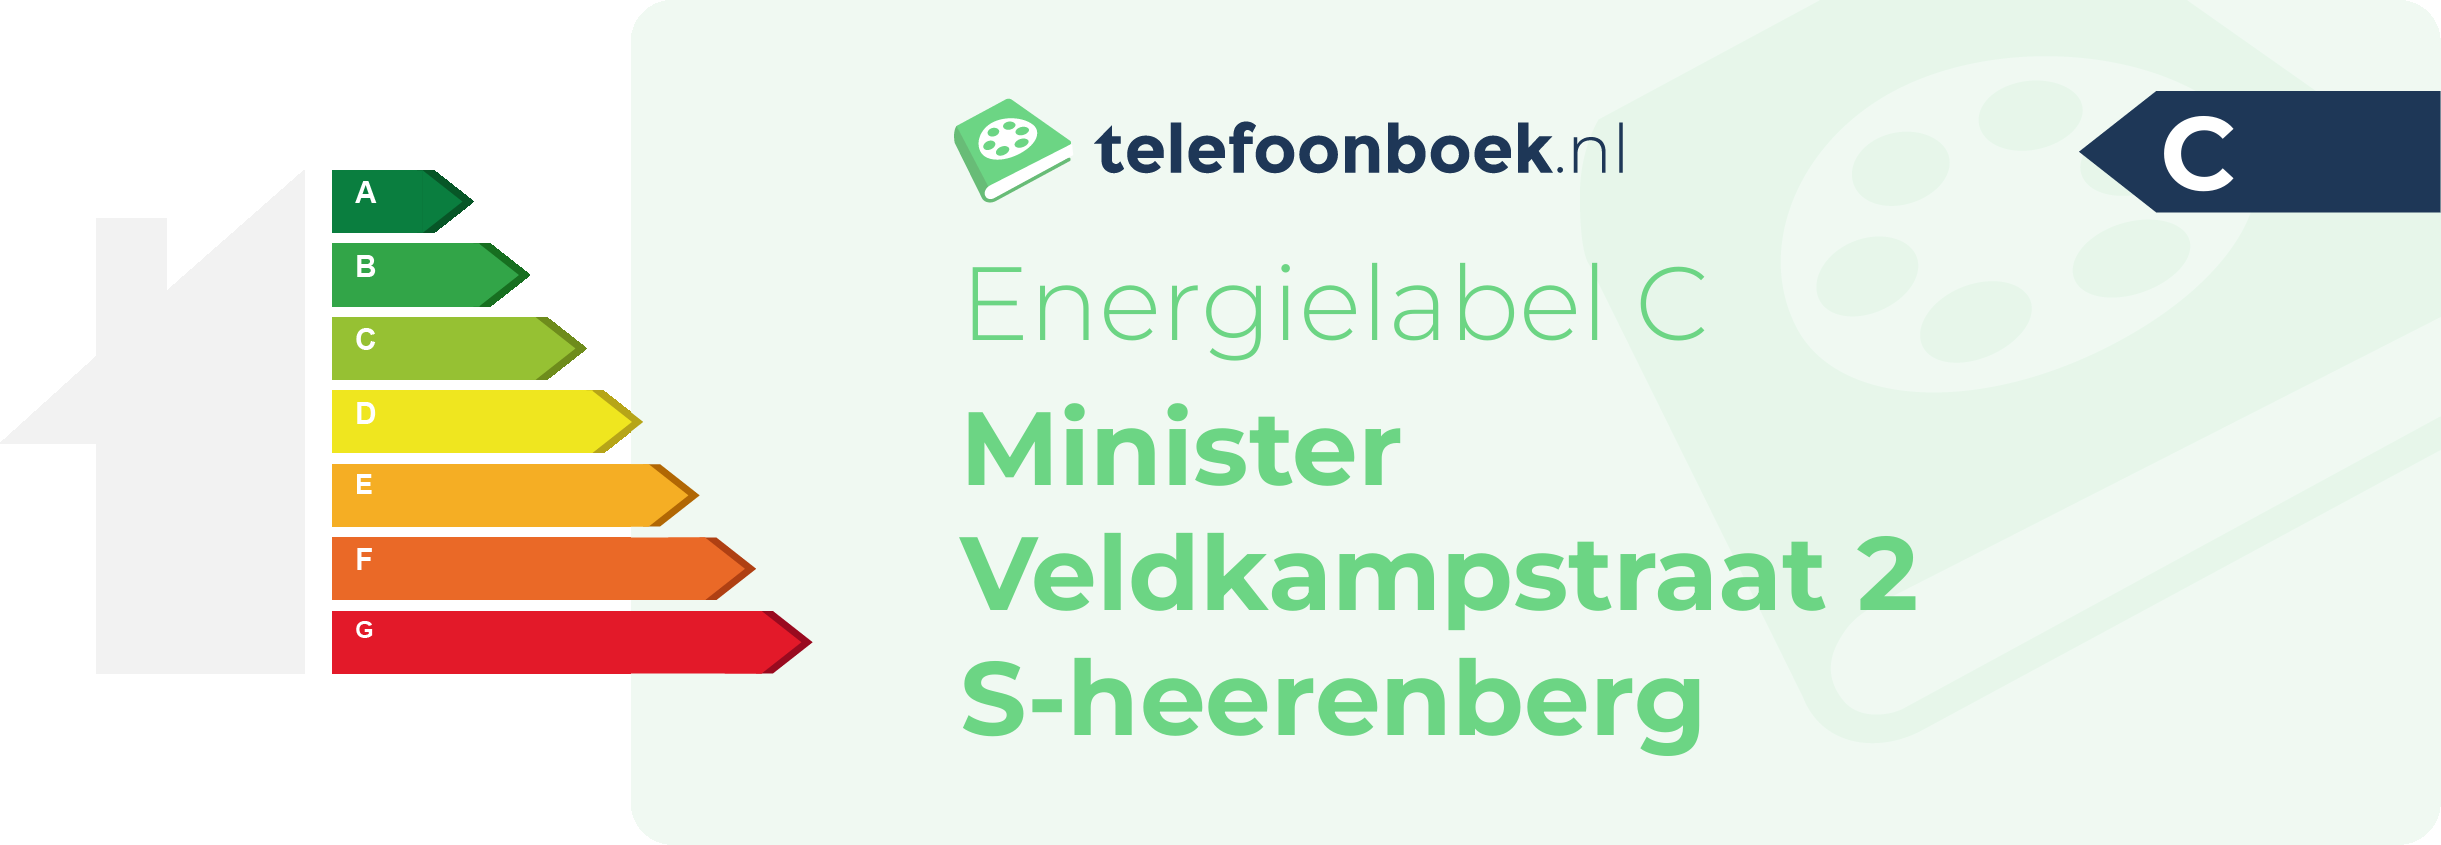 Energielabel Minister Veldkampstraat 2 S-Heerenberg